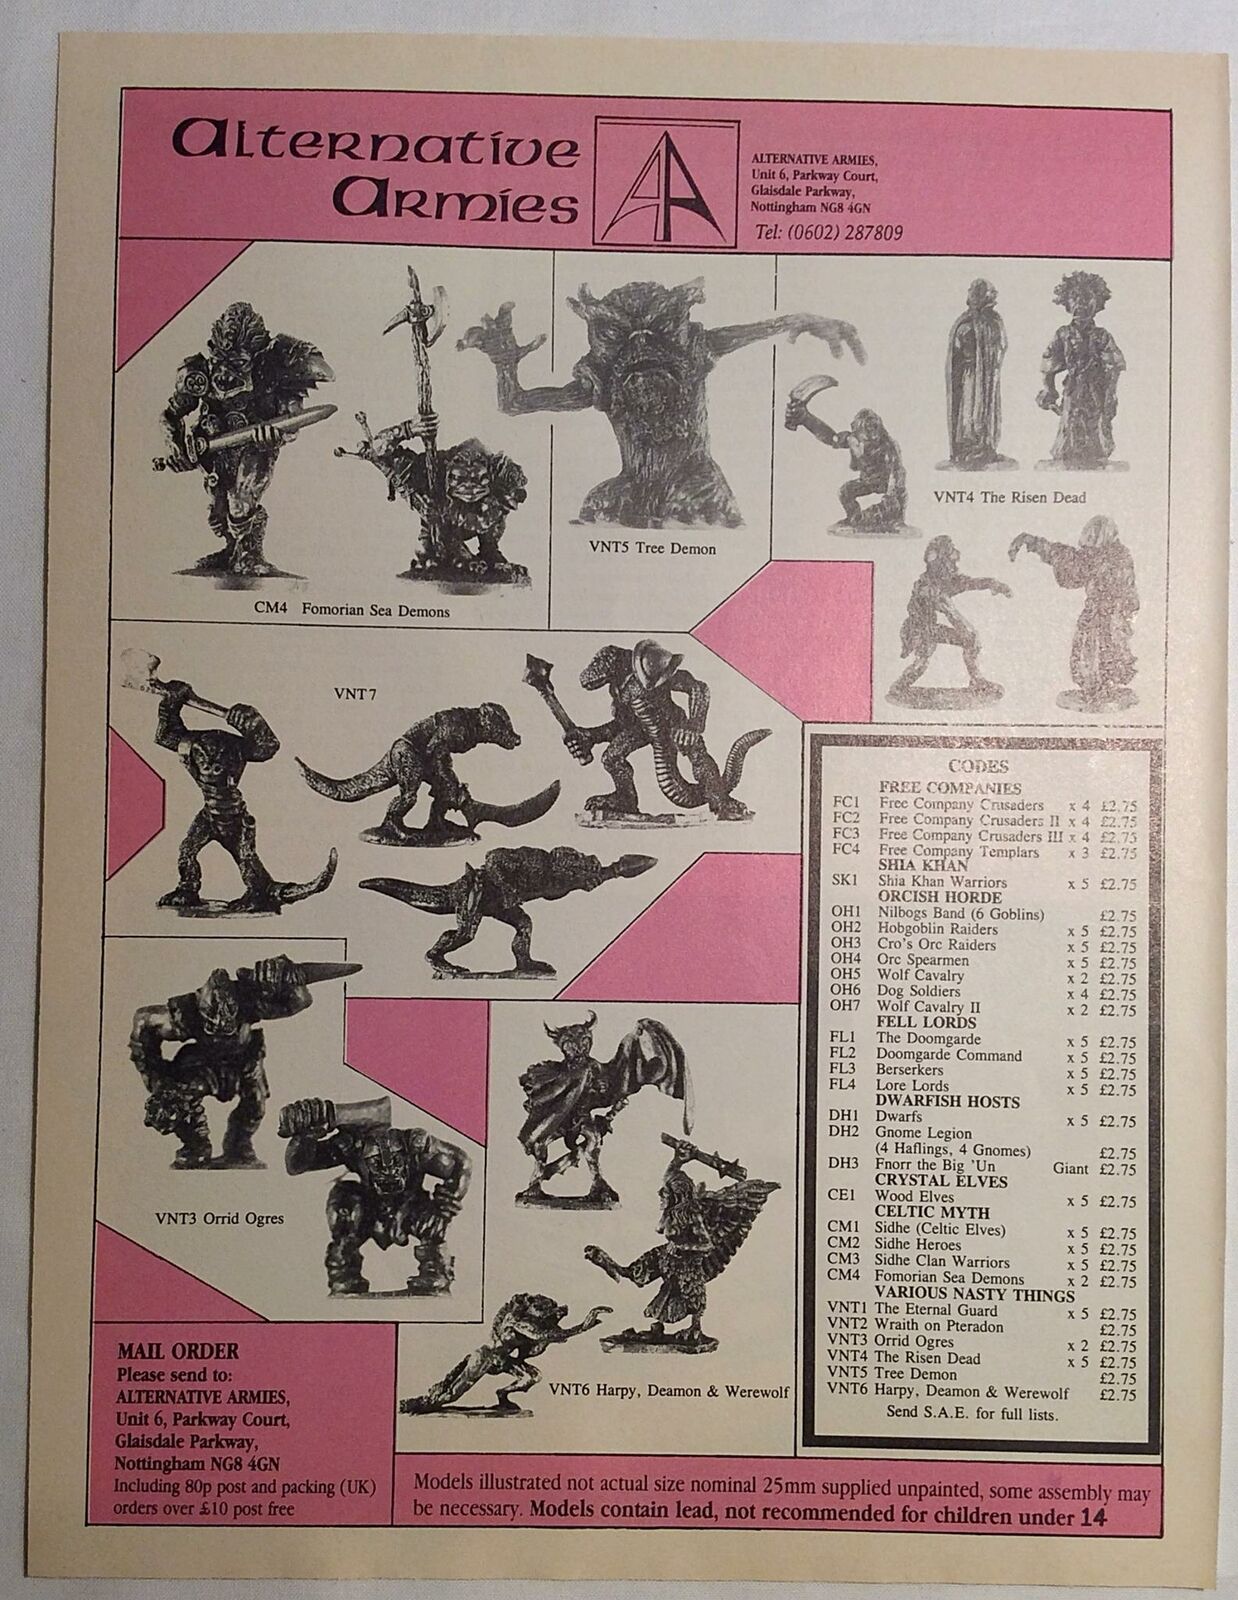 Vintage Original Print Ad 1989 Alternative Armies Models Figurines   PA-194